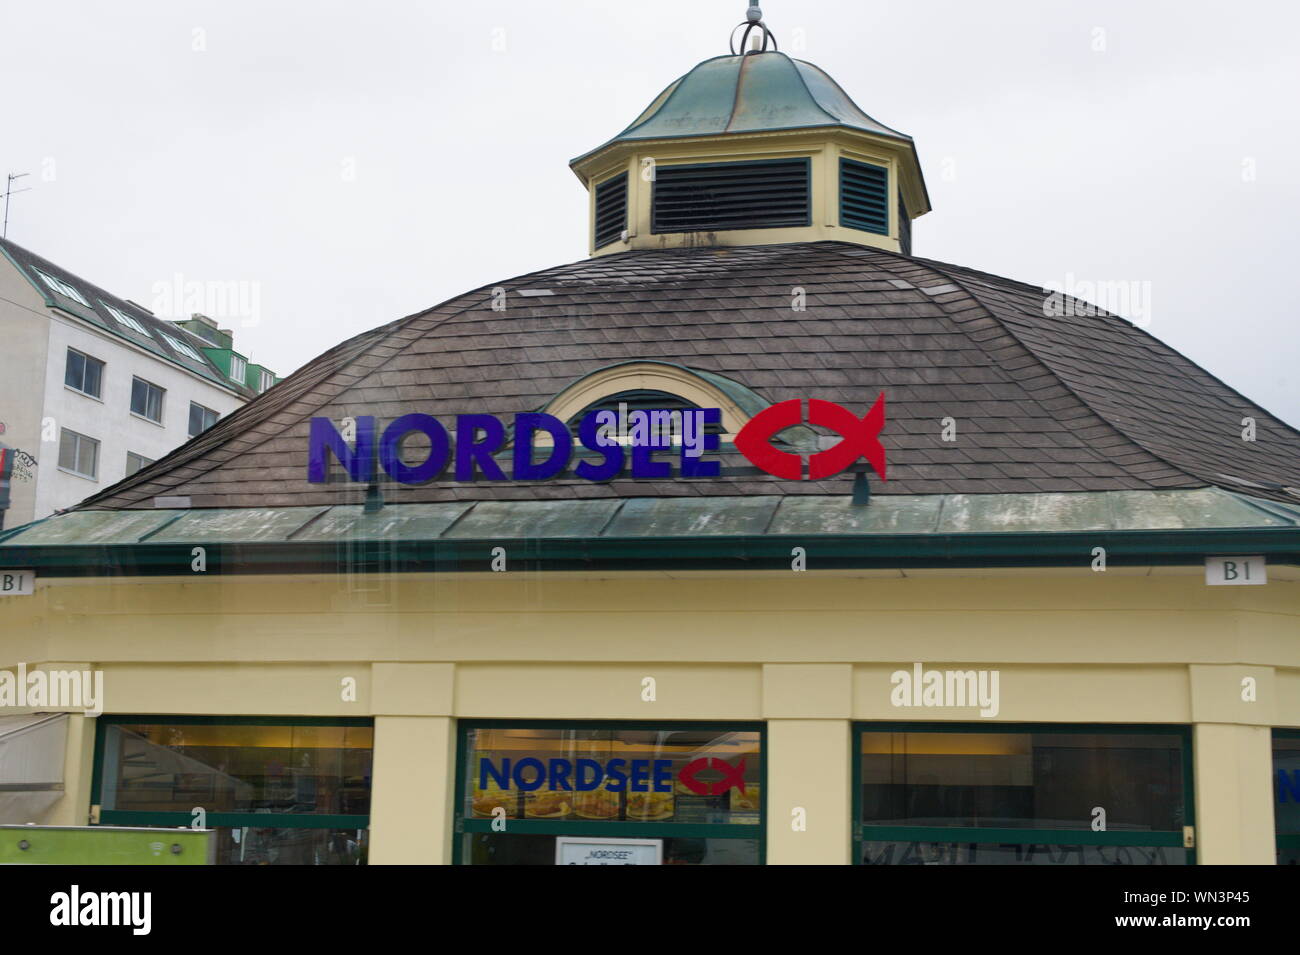 Nordsee (North Sea) Fish Store, Vienna, Austria Stock Photo